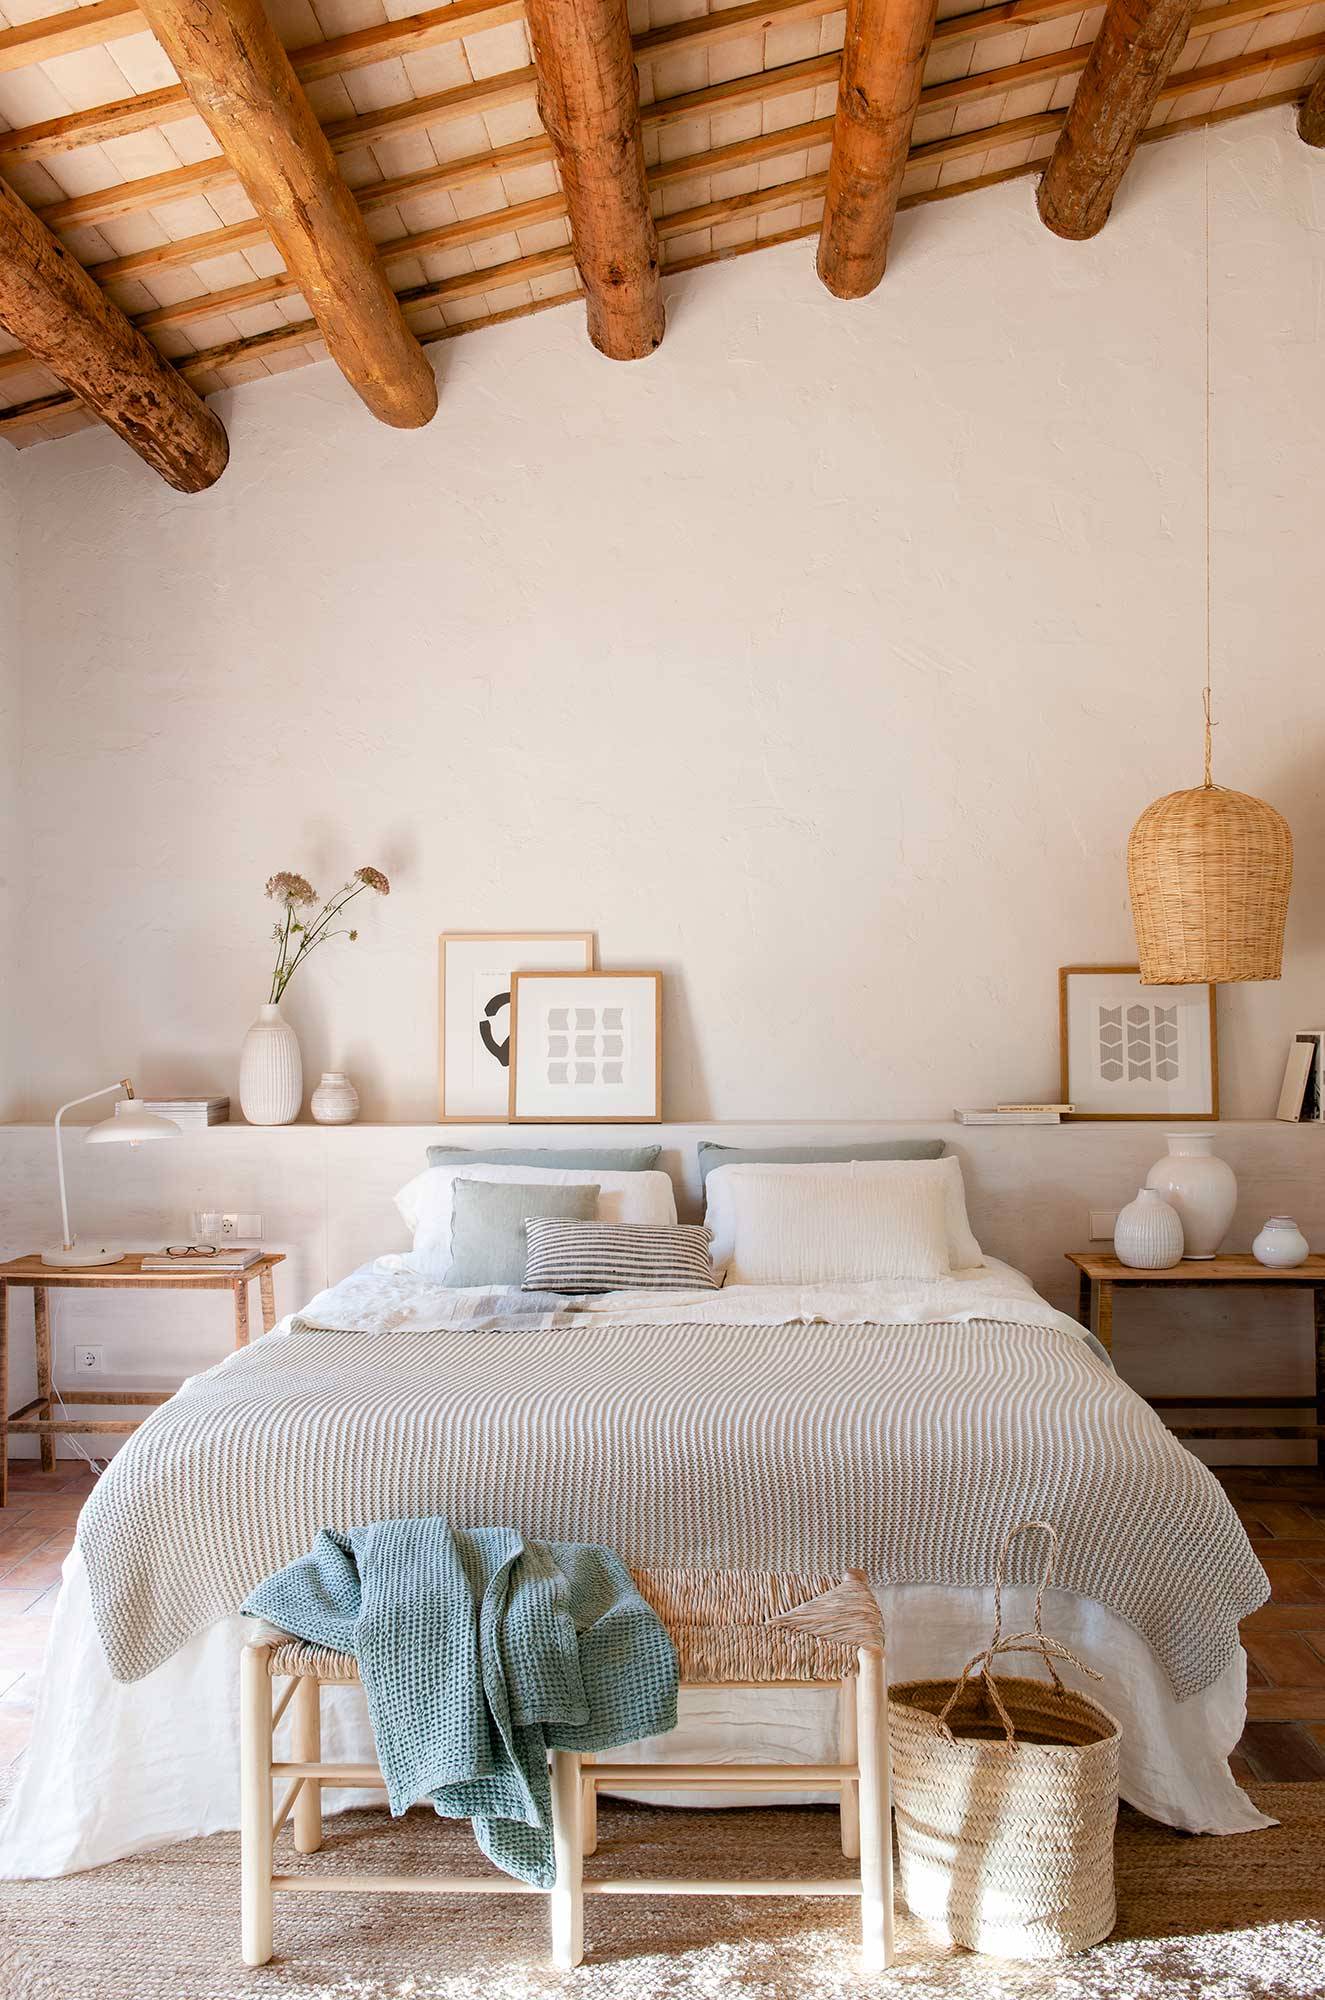 Dormitorio campestre fresco en blanco_00510353 O